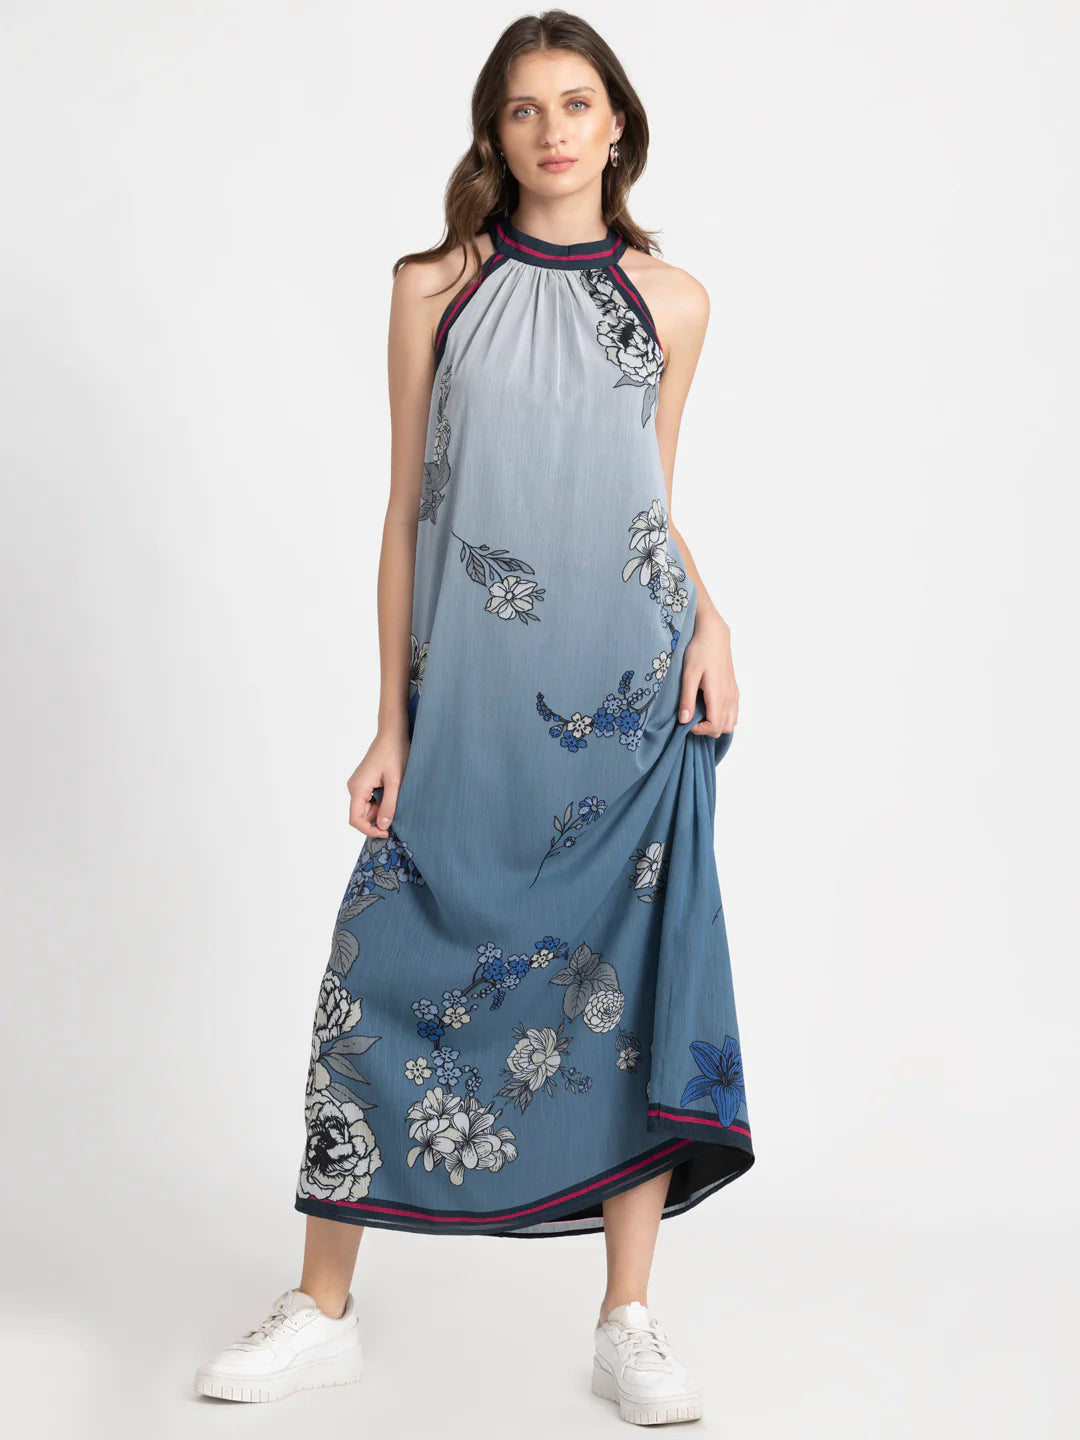 Gray Floral Maxi Dress | Graceful Gray Ombre Floral Maxi Dress